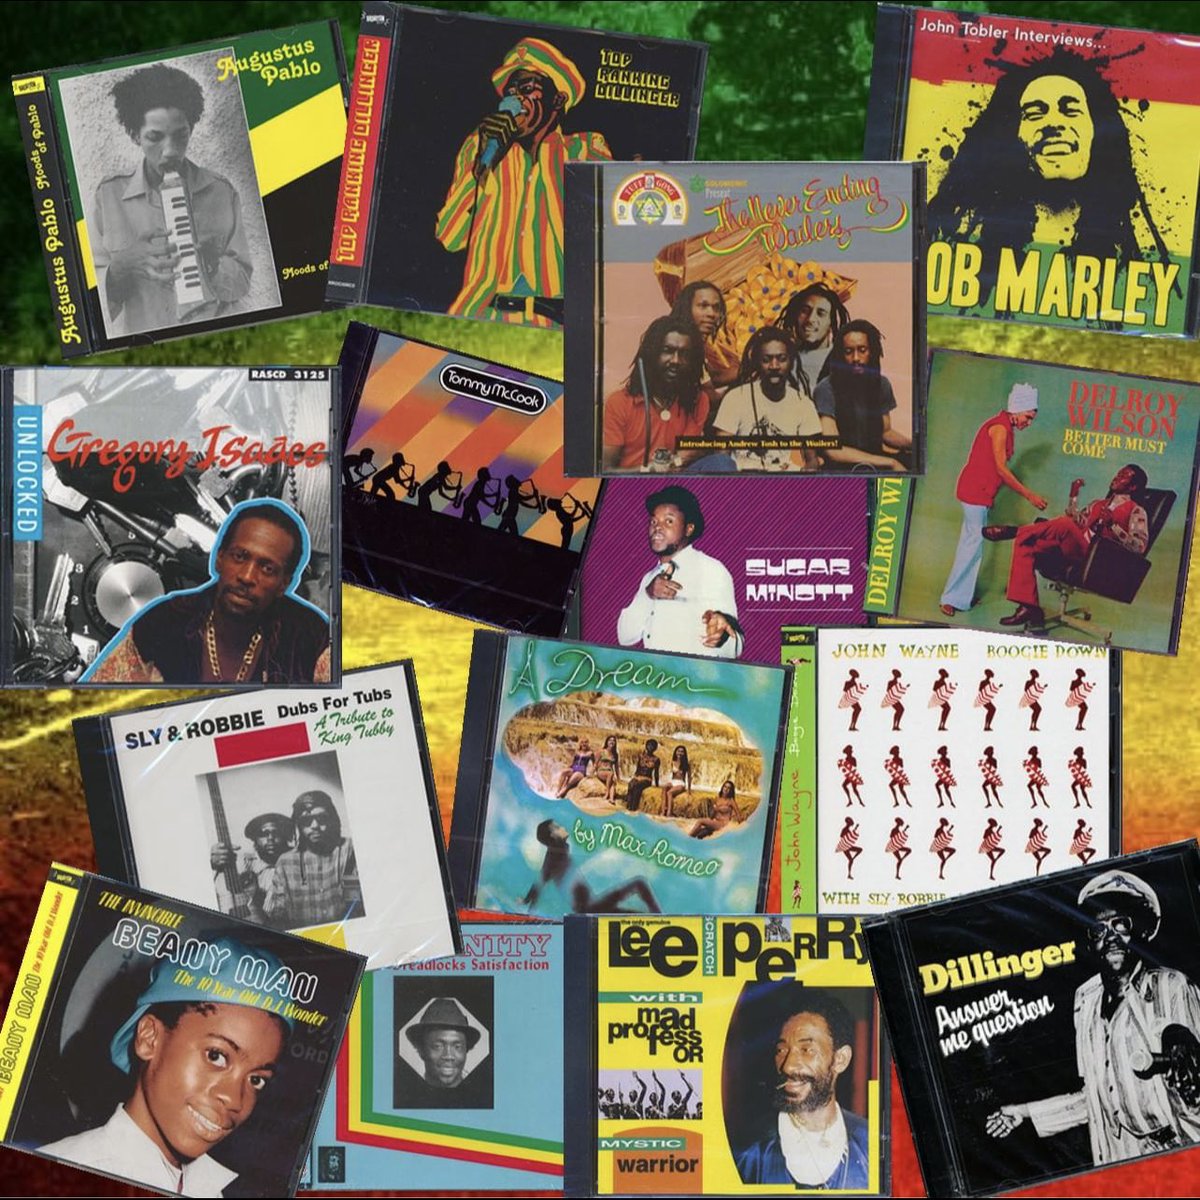 Reggae CD's $3.99 WOW, Get in on this!
#cdsonsale #reggaecds #reggae #supportsmall #reggaelove #reggaelife #reggaemusic #reggaevibes #slyandrobbie #leescratchperry #bobmarley #augustuspablo #gregoryisaacs #slyandrobbie #delroywilson #sugarminott